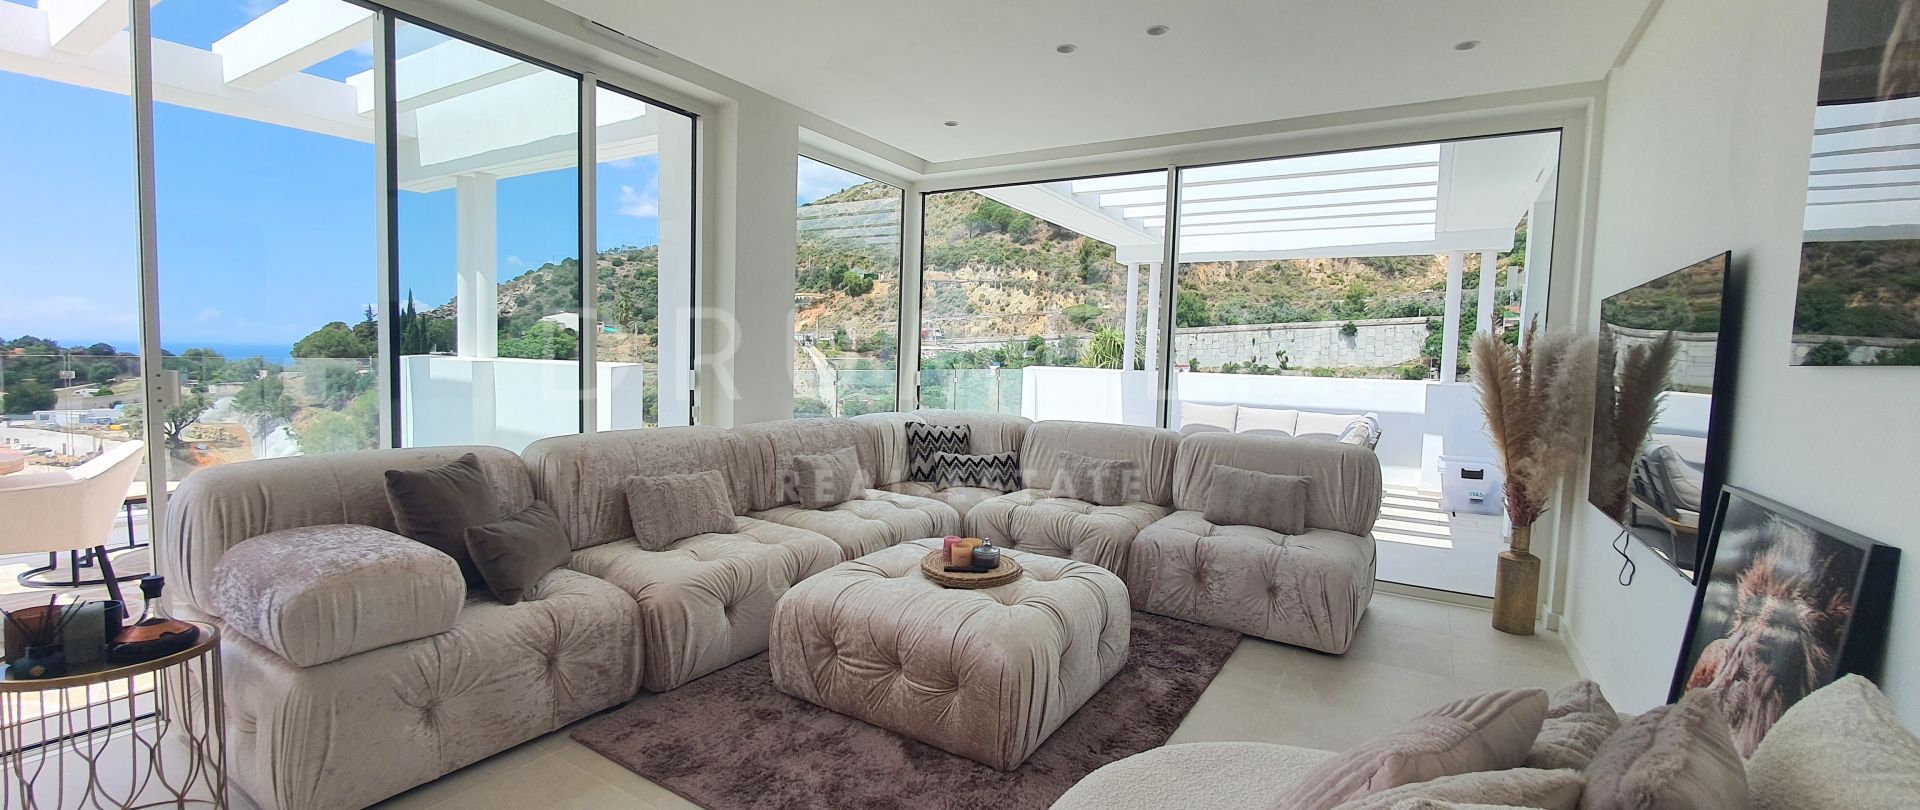 Neues modernes Luxus-Penthouse in Palo Alto mit atemberaubendem Meer- und Bergblick, Ojen